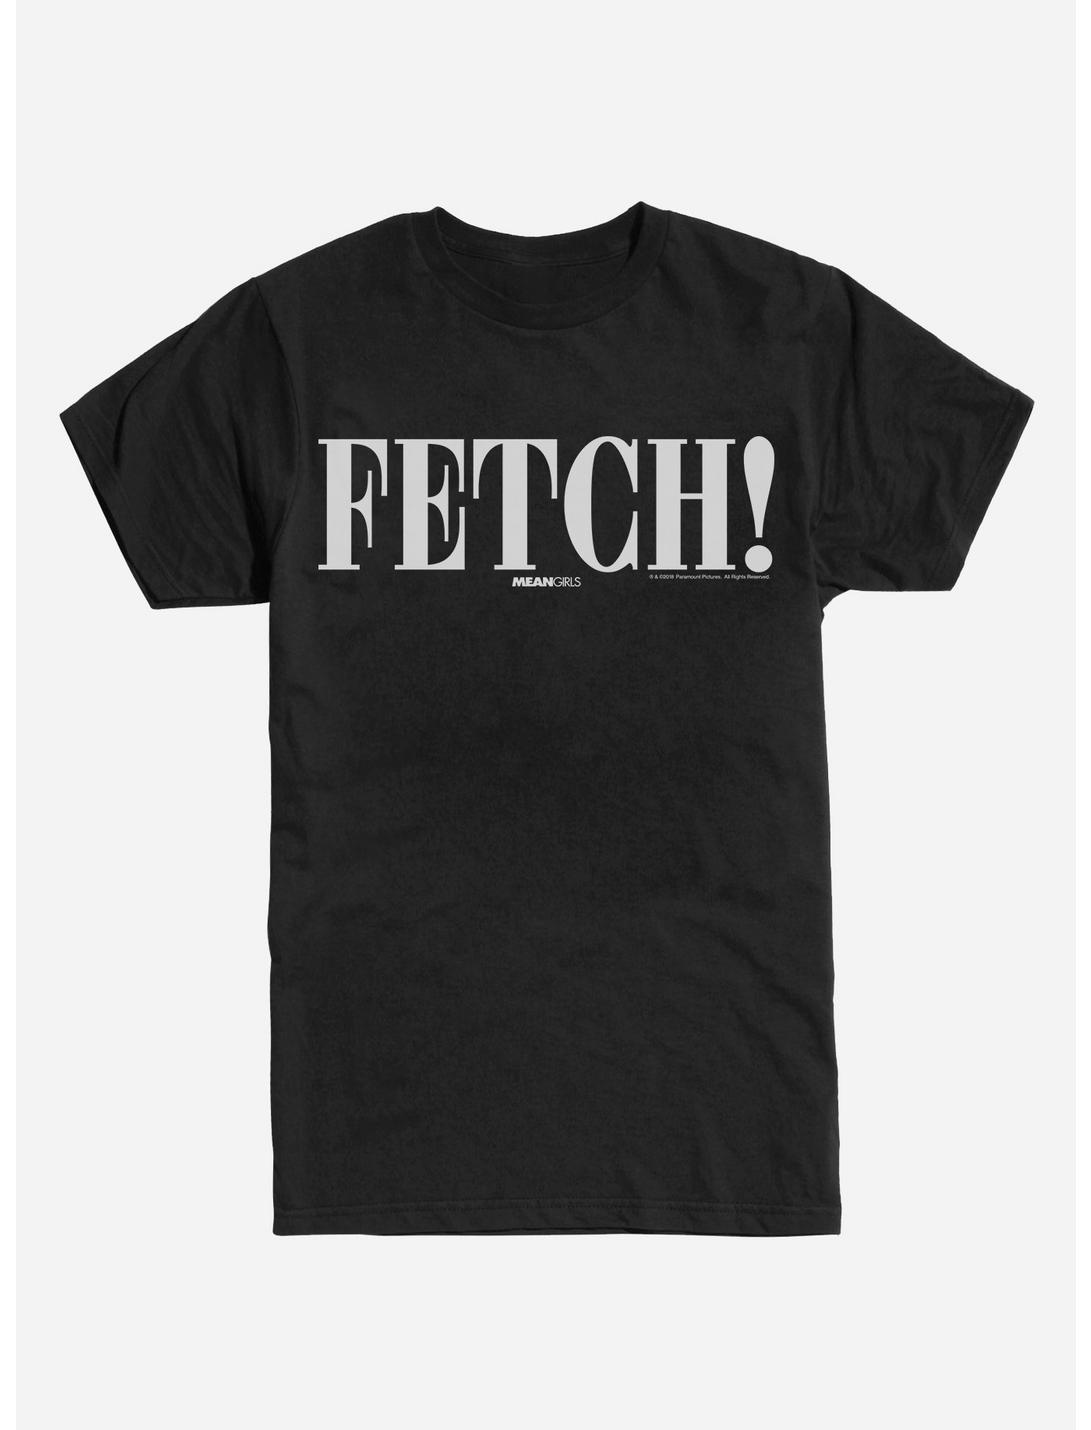 Mean Girls Fetch! T-Shirt, BLACK, hi-res